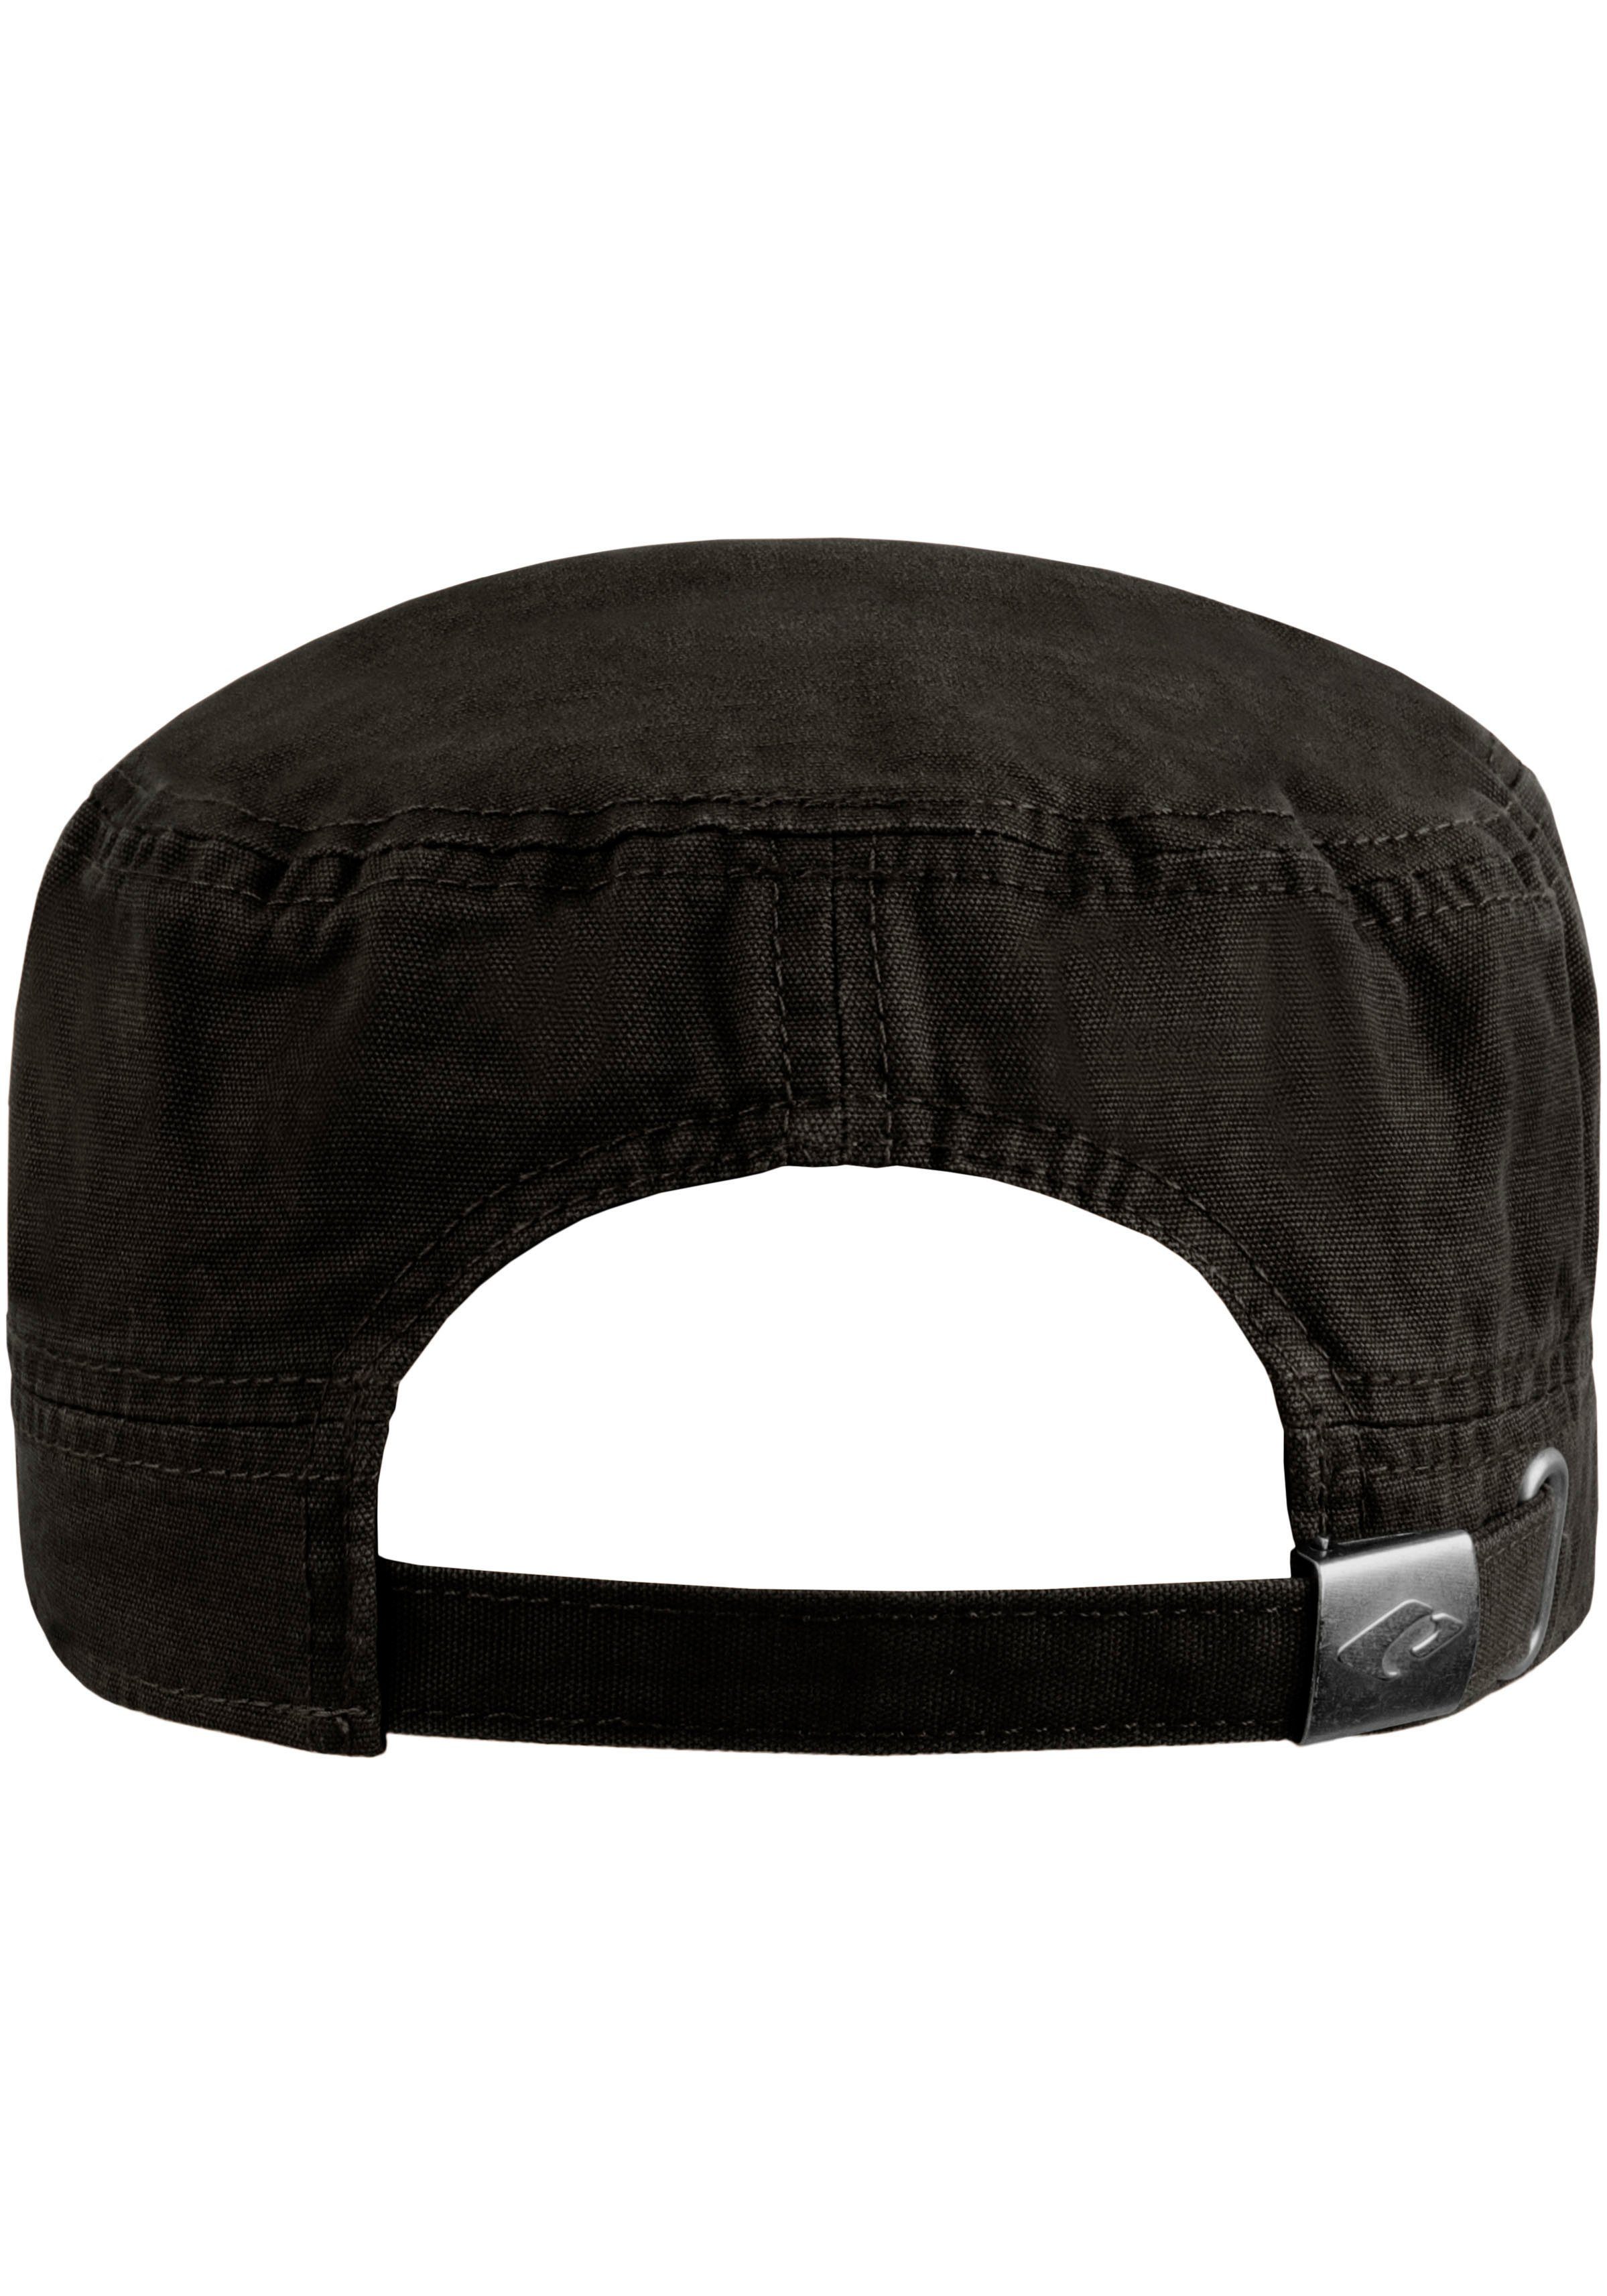 schwarz chillouts Cap Army Hat Mililtary-Style im Cap Dublin